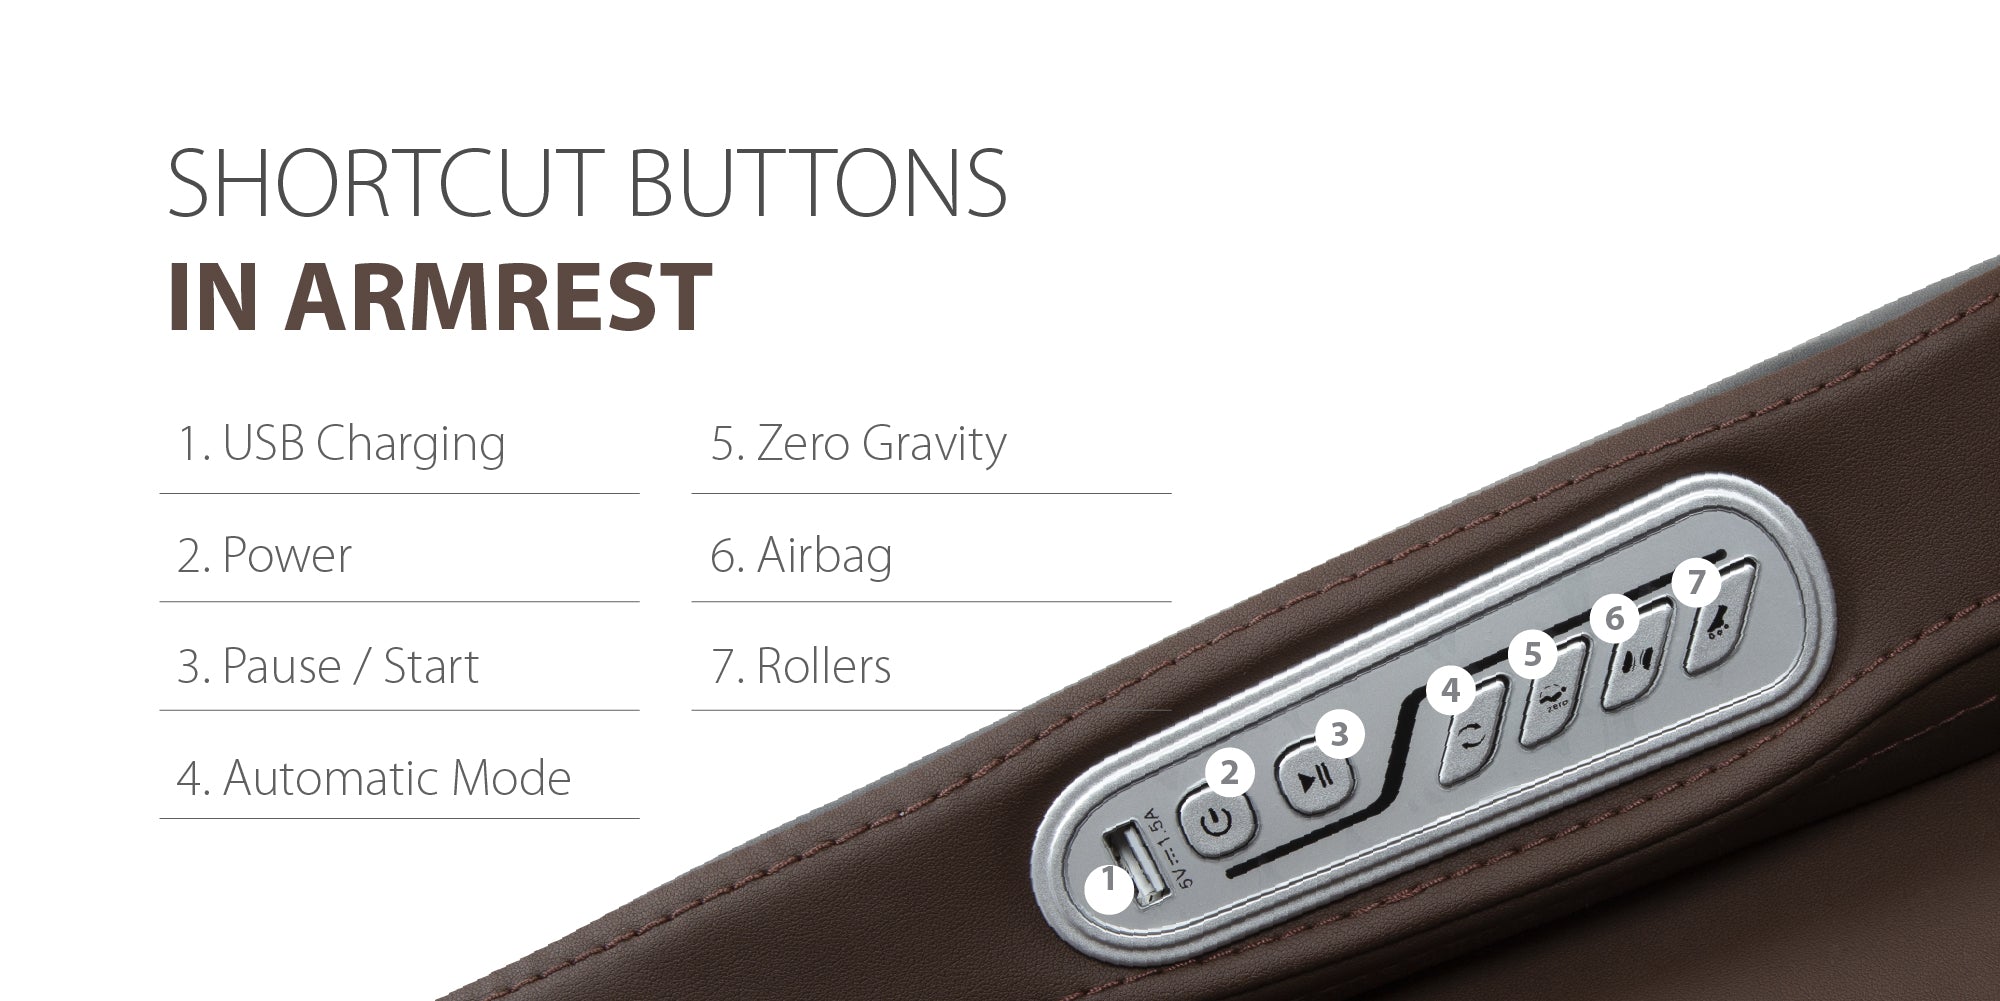 Shortcut Buttons in armrest